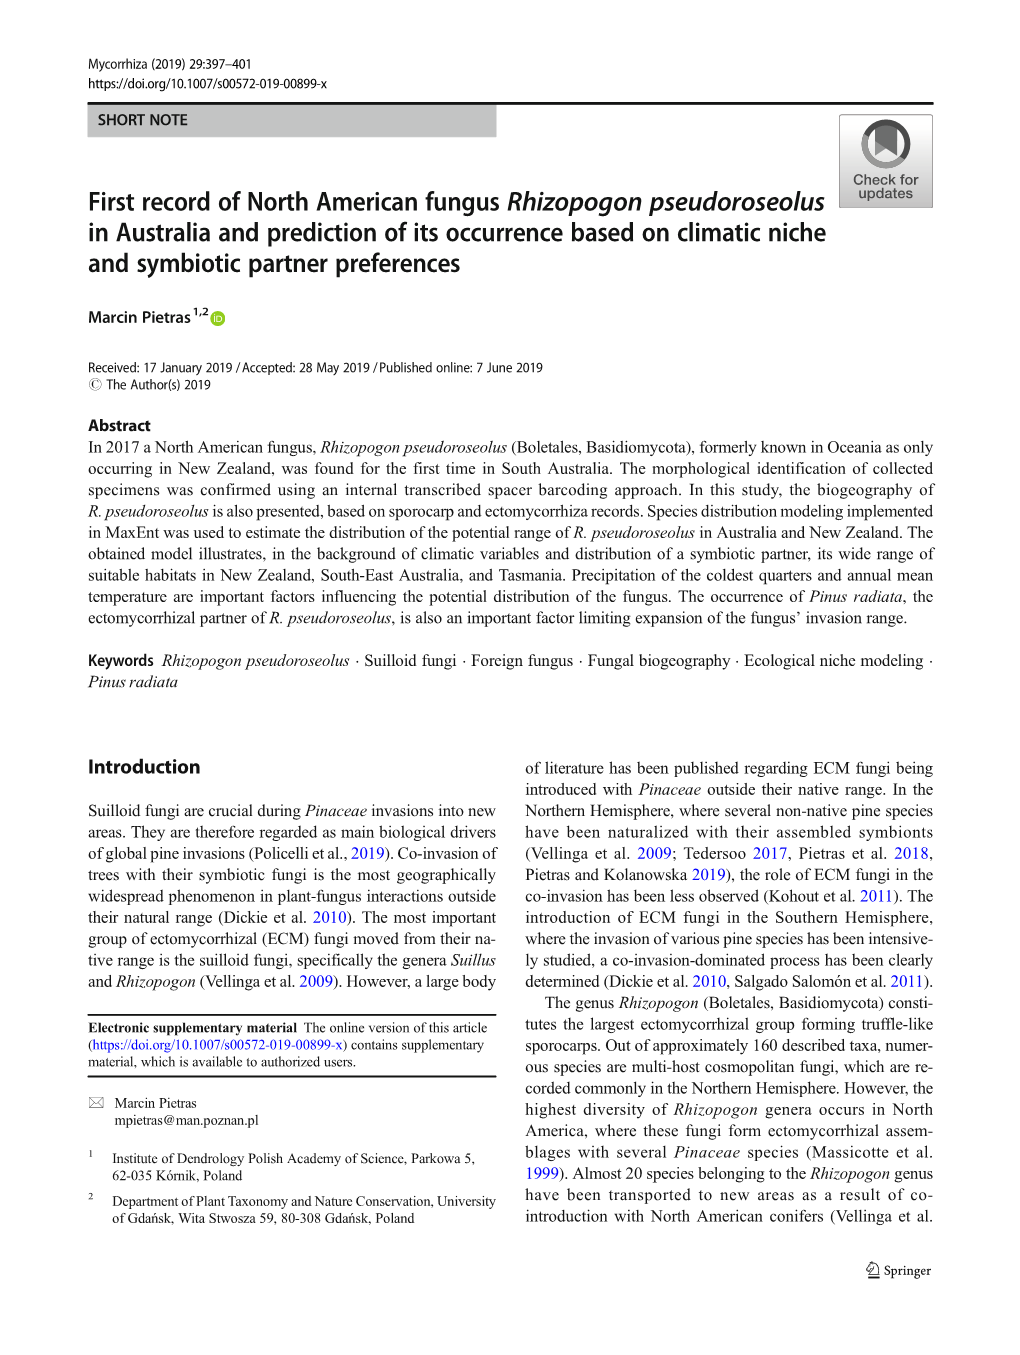 First Record of North American Fungus Rhizopogon Pseudoroseolus In